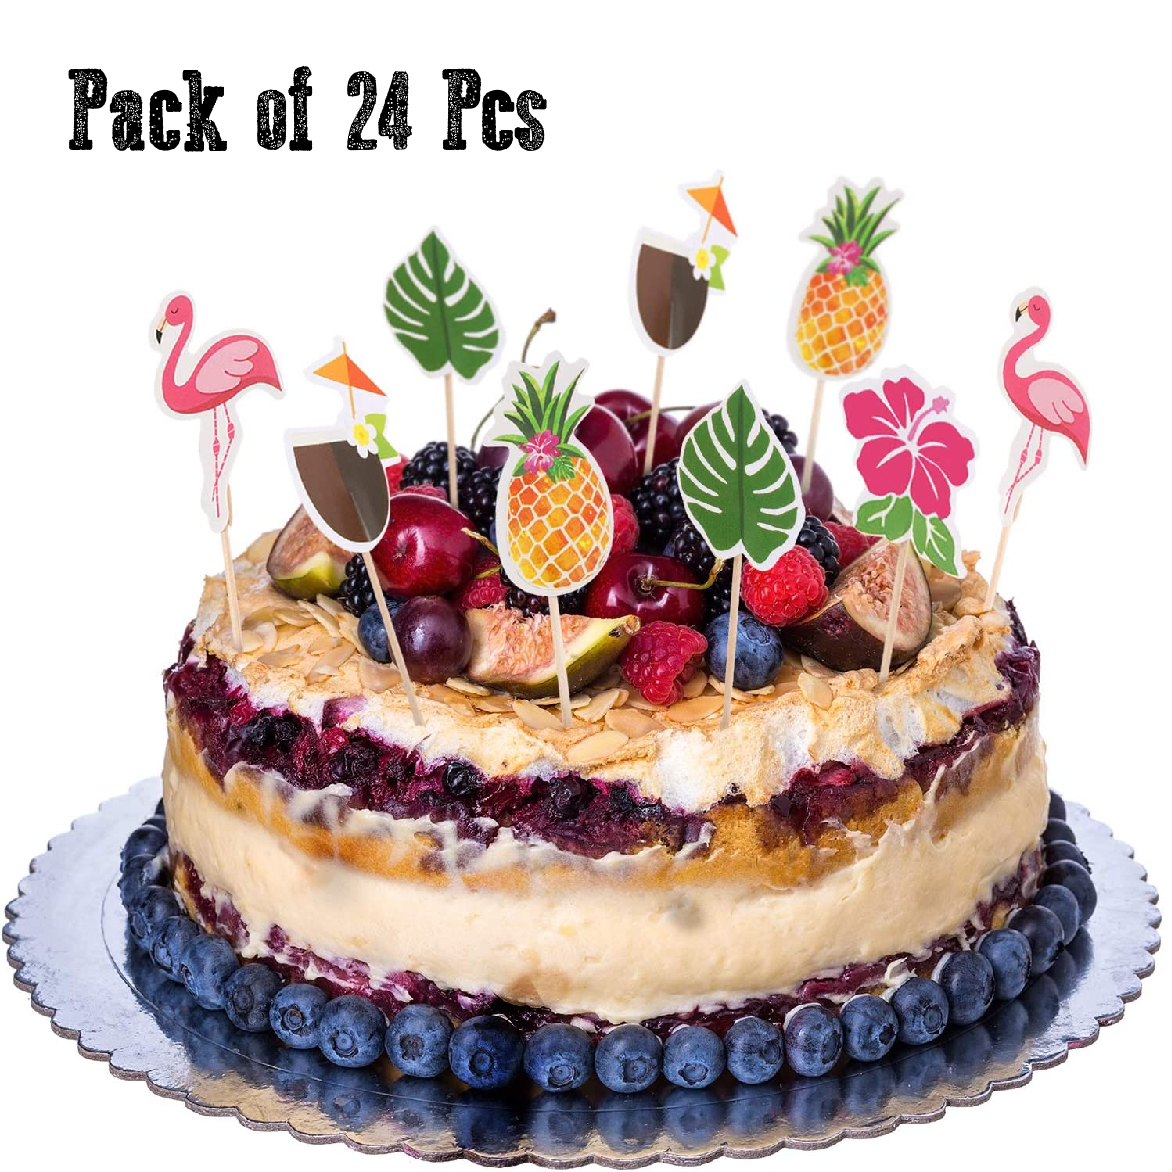 Cupcake Toppers/ Cake Decoration - Tropical Theme Flamingo - Set of 24pcs